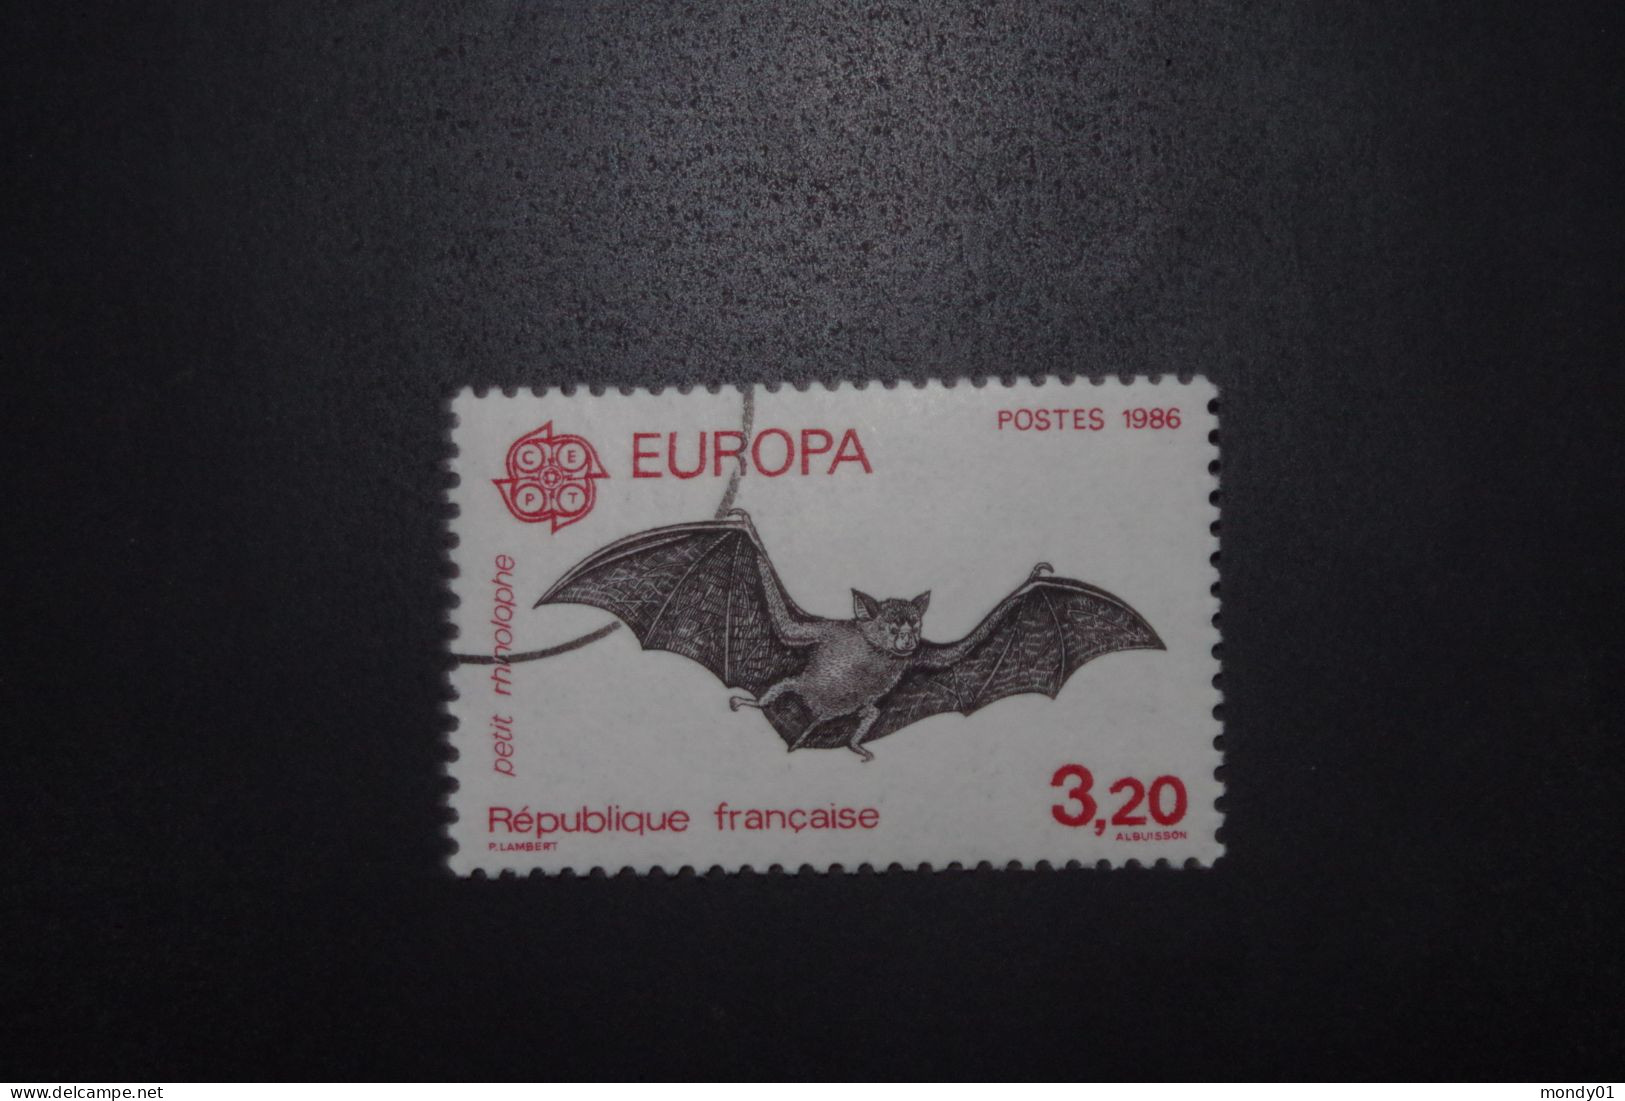 4-1081 Chauve Souris Mammifère Volant Europa Timbre De Presse Press Stamp - Chauve-souris